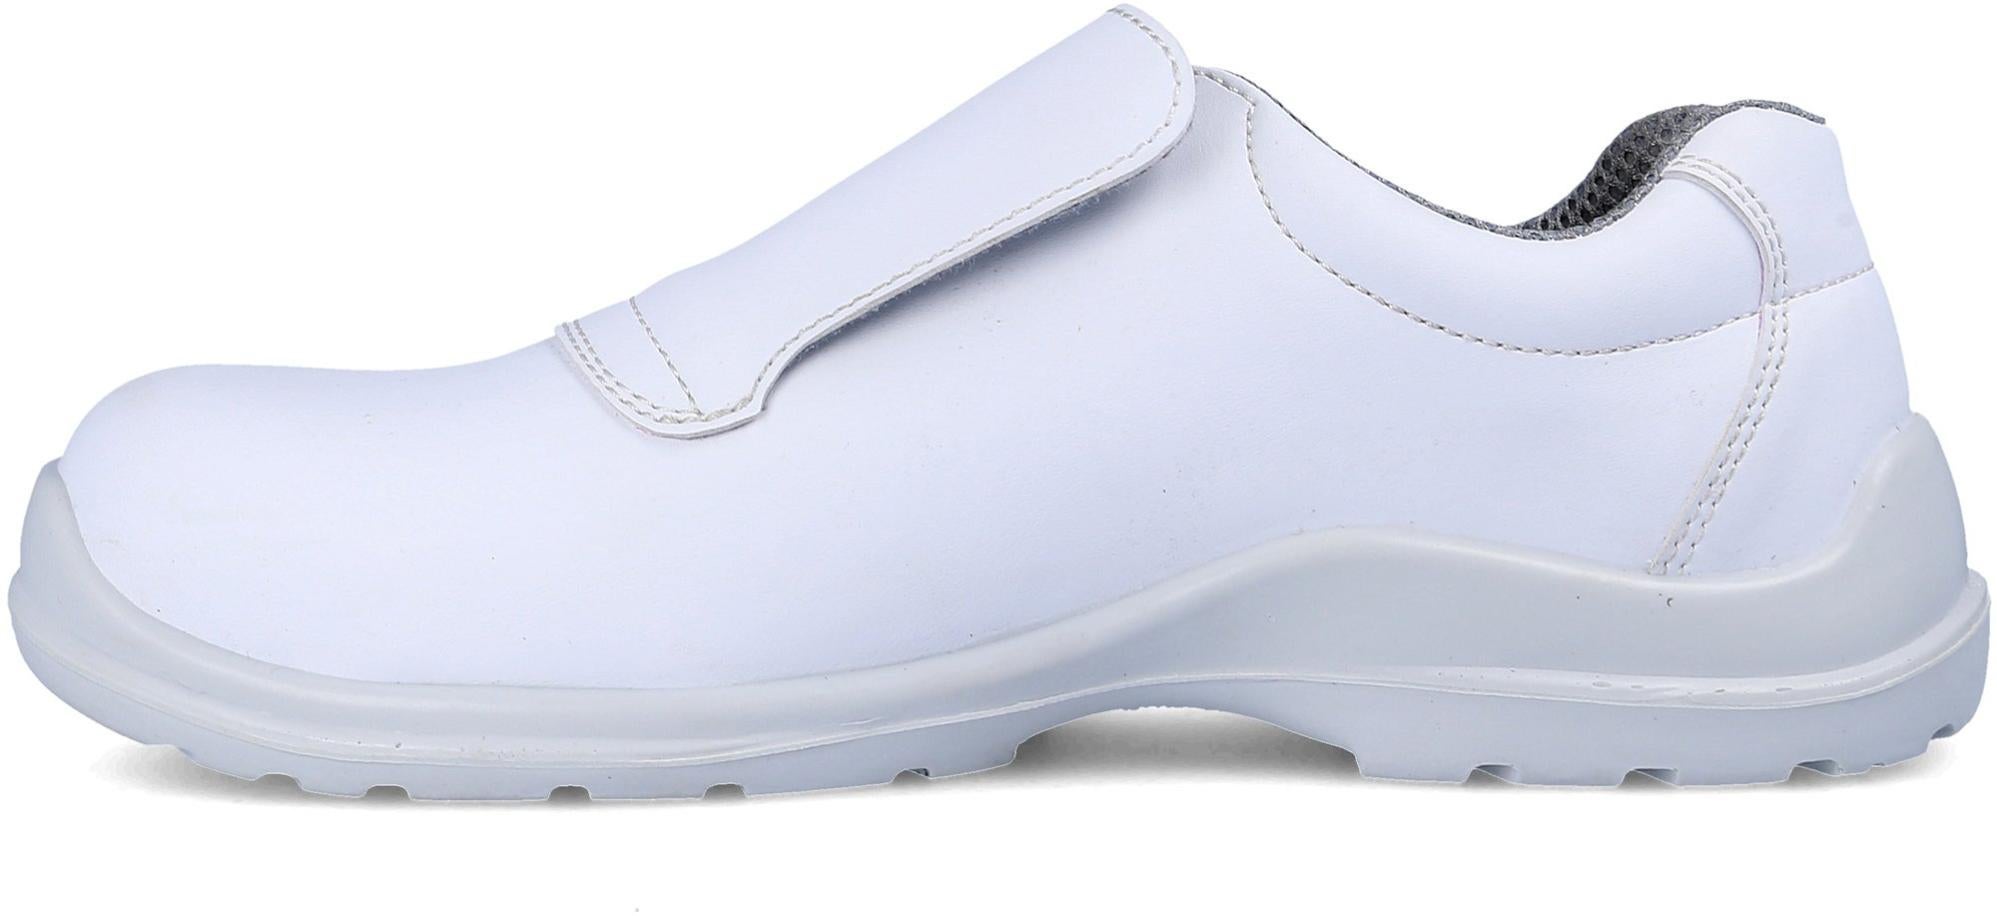 Zapato seguridad paredes, arzak microfibra blanco, talla 39